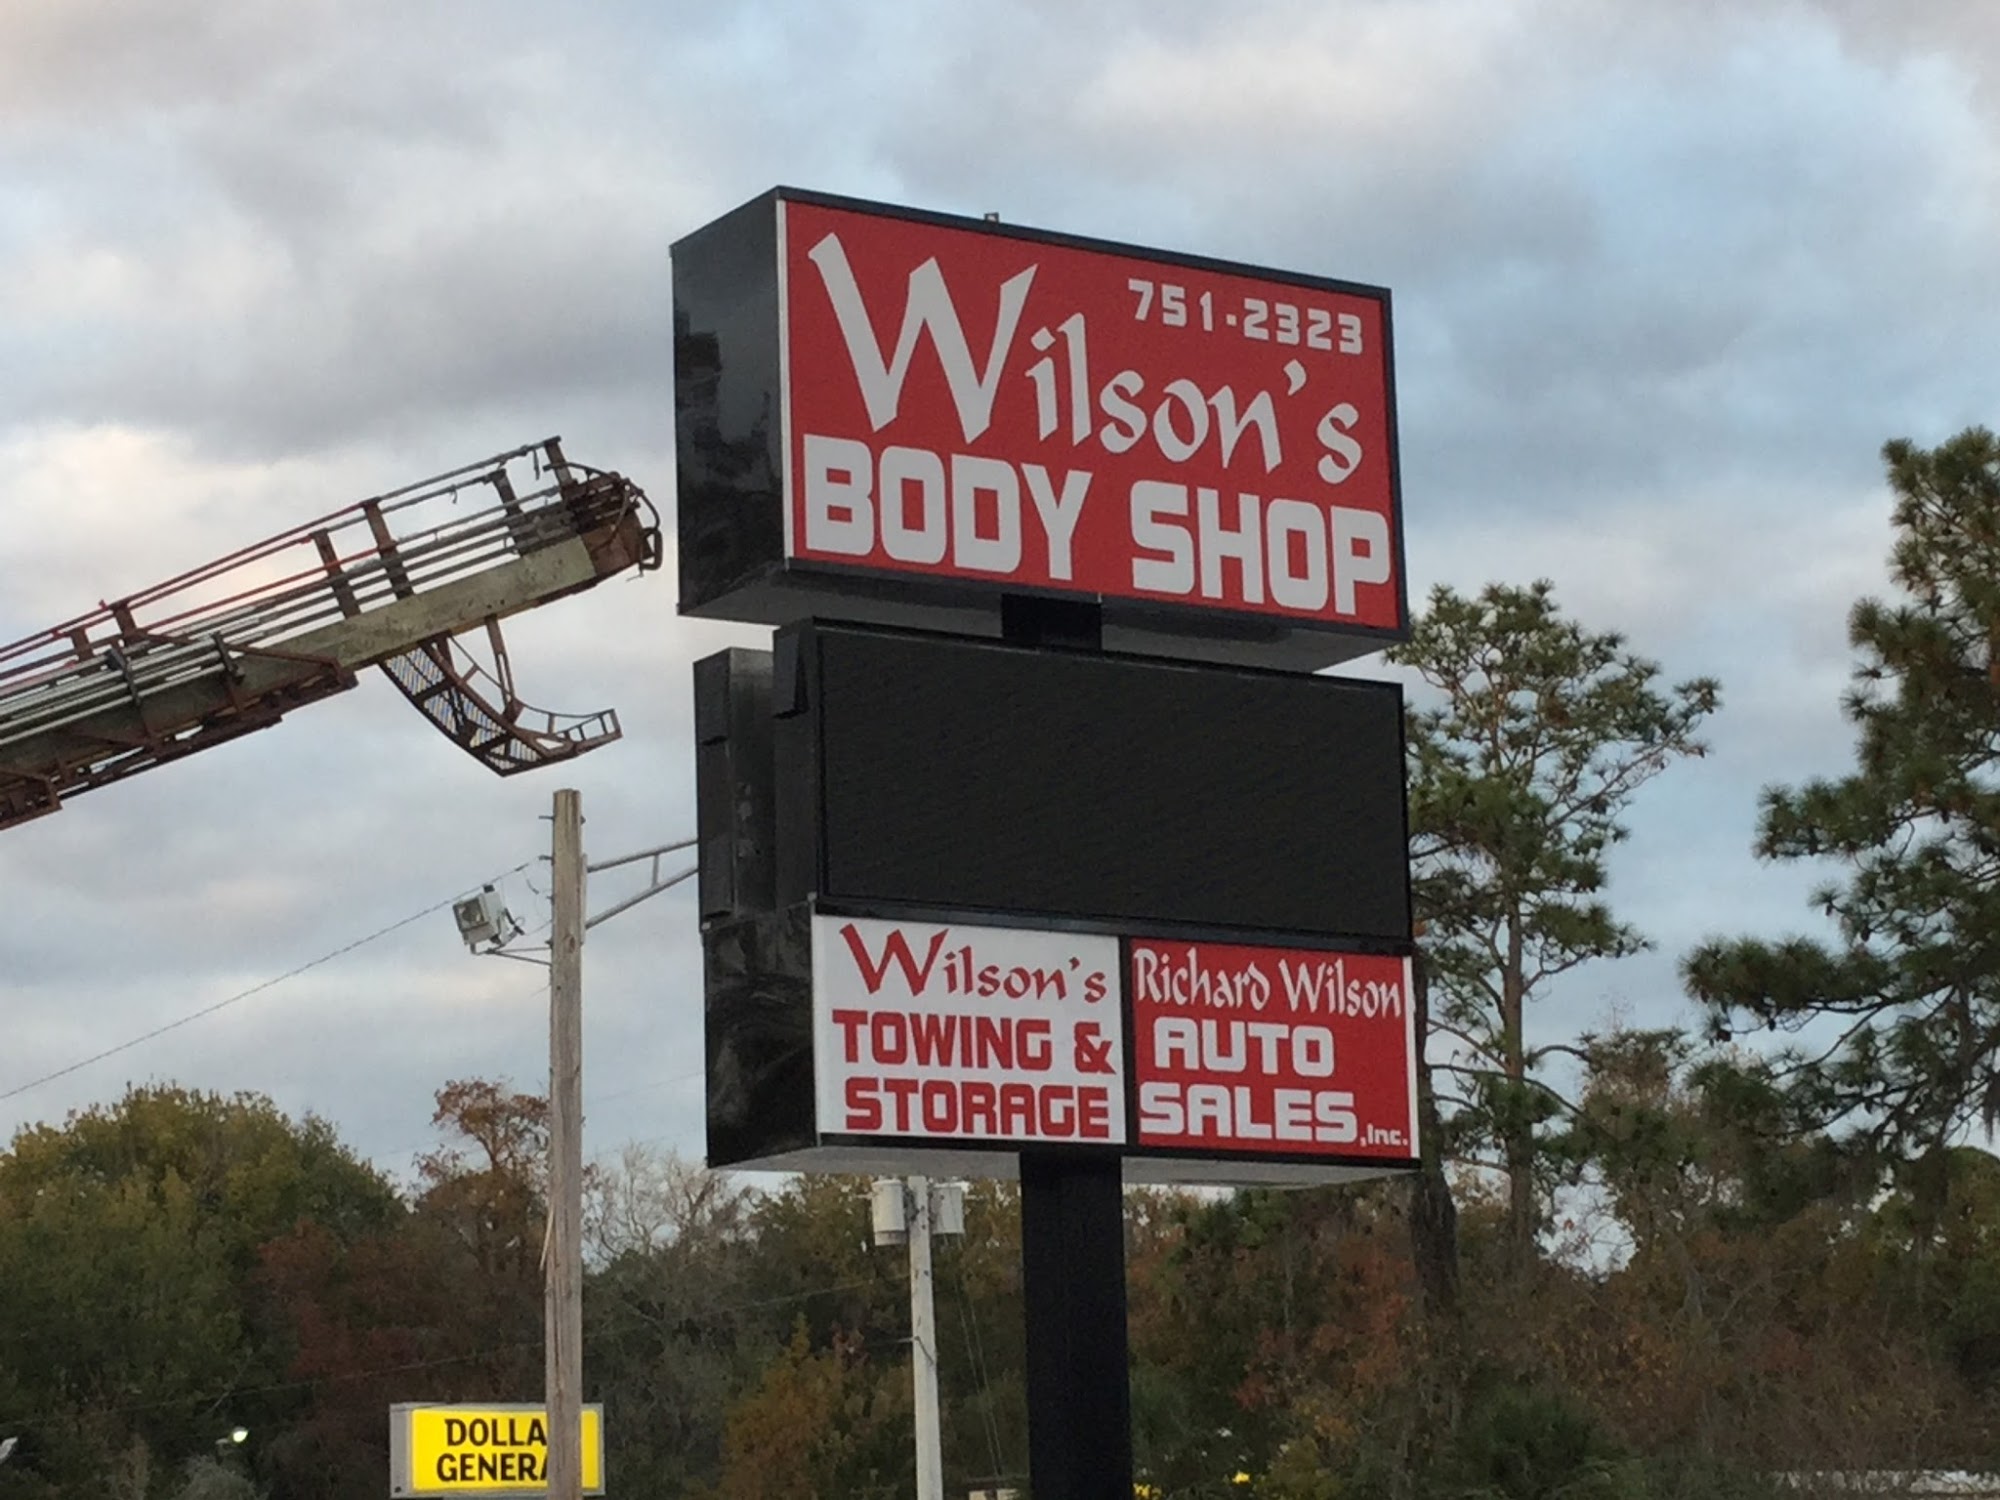 Wilson's Body Shop